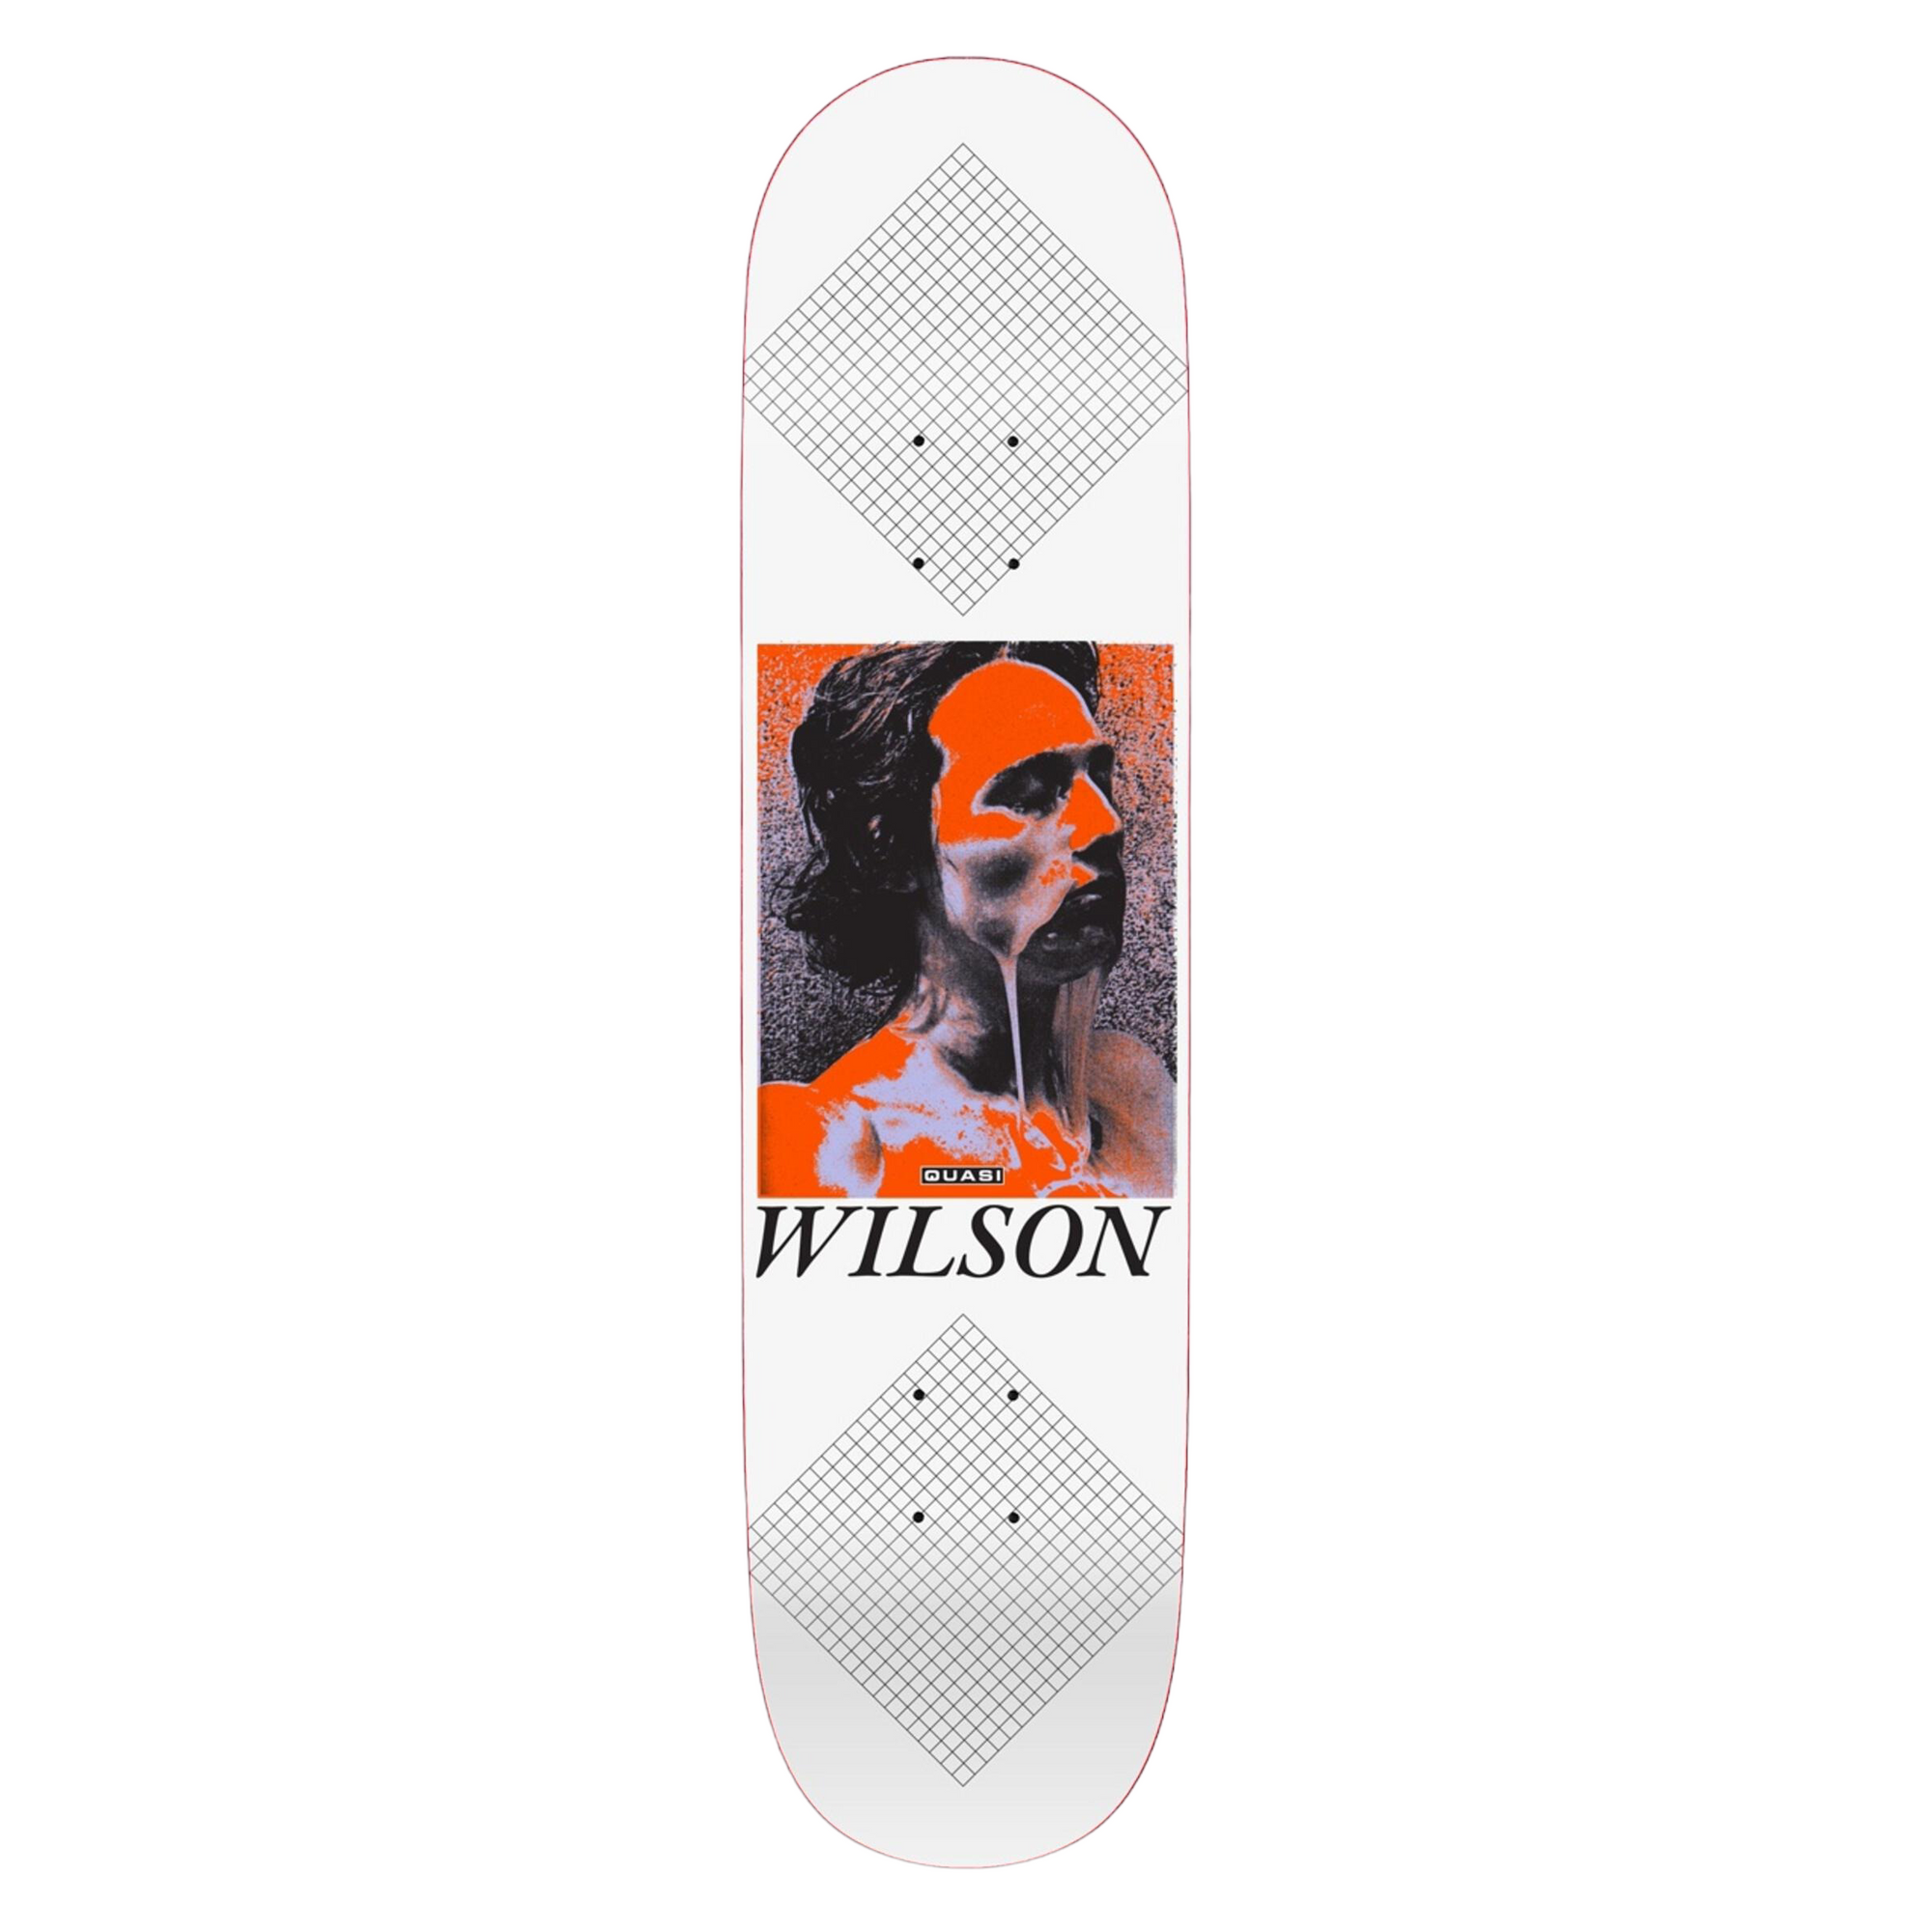 Quasi Wilson Skin Deck 8.125"